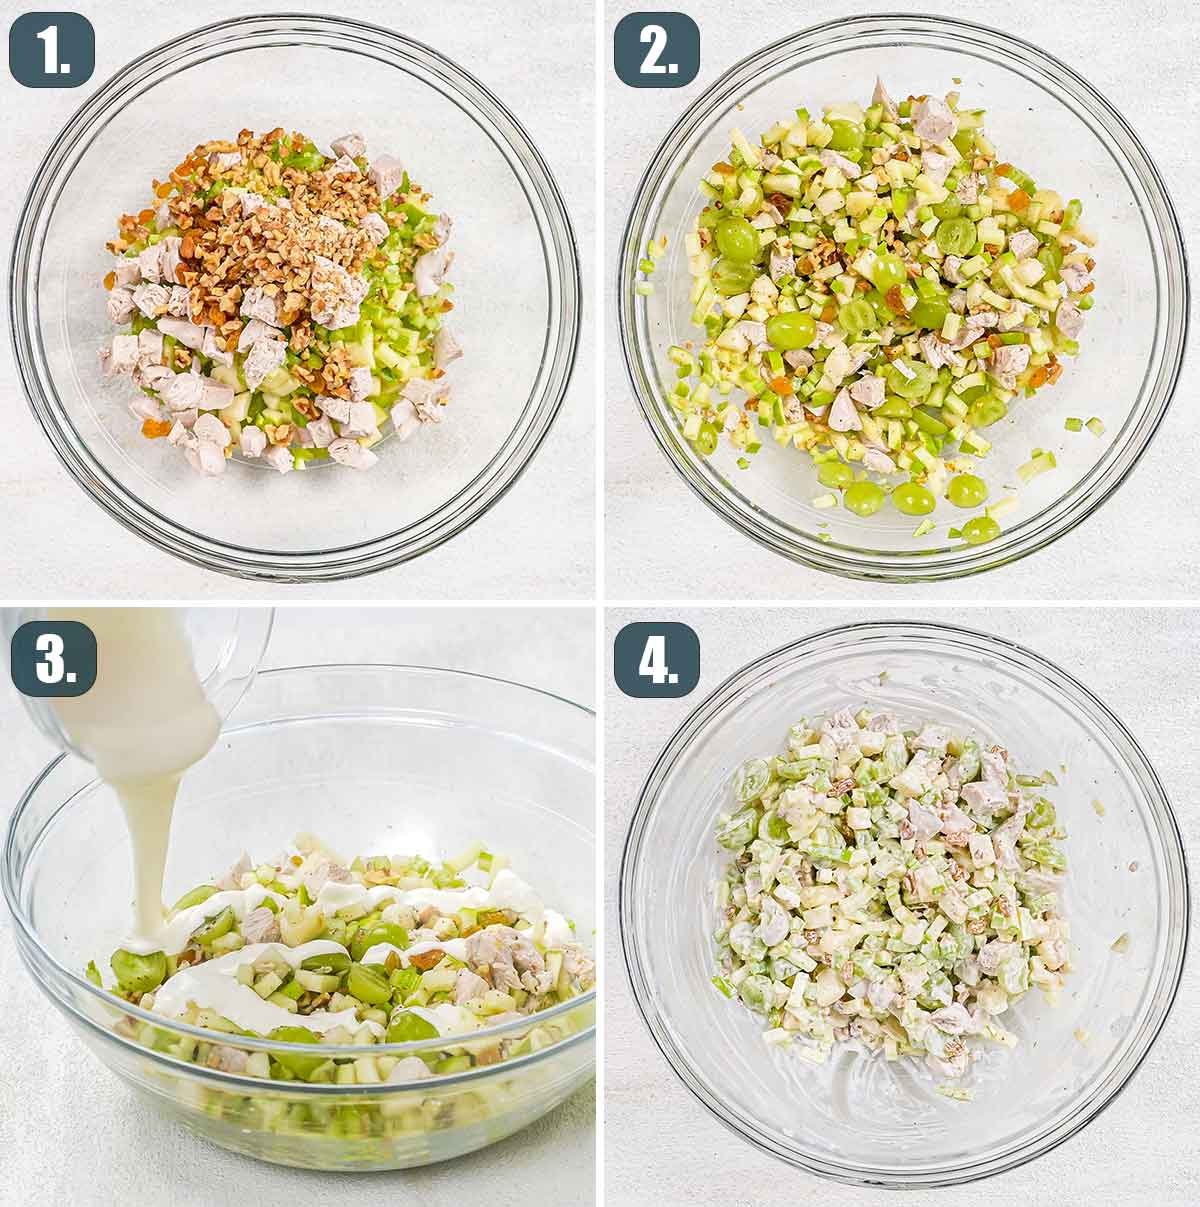 detailed process shots showing how to make waldorf salad.